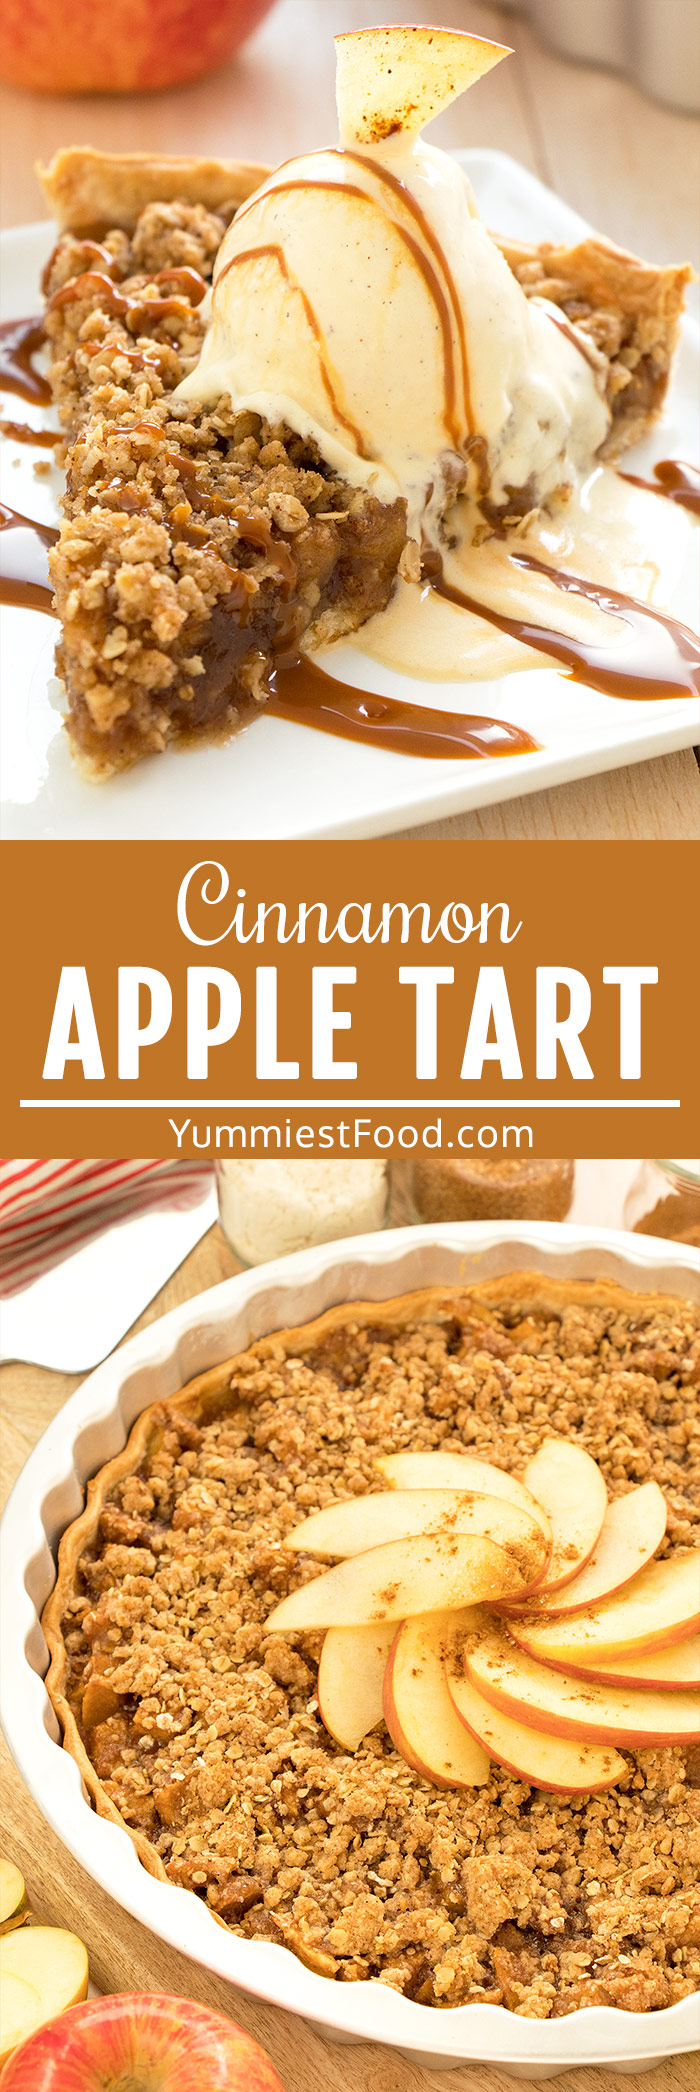 Cinnamon Apple Tart Recipe with Caramel Ice Cream Topping